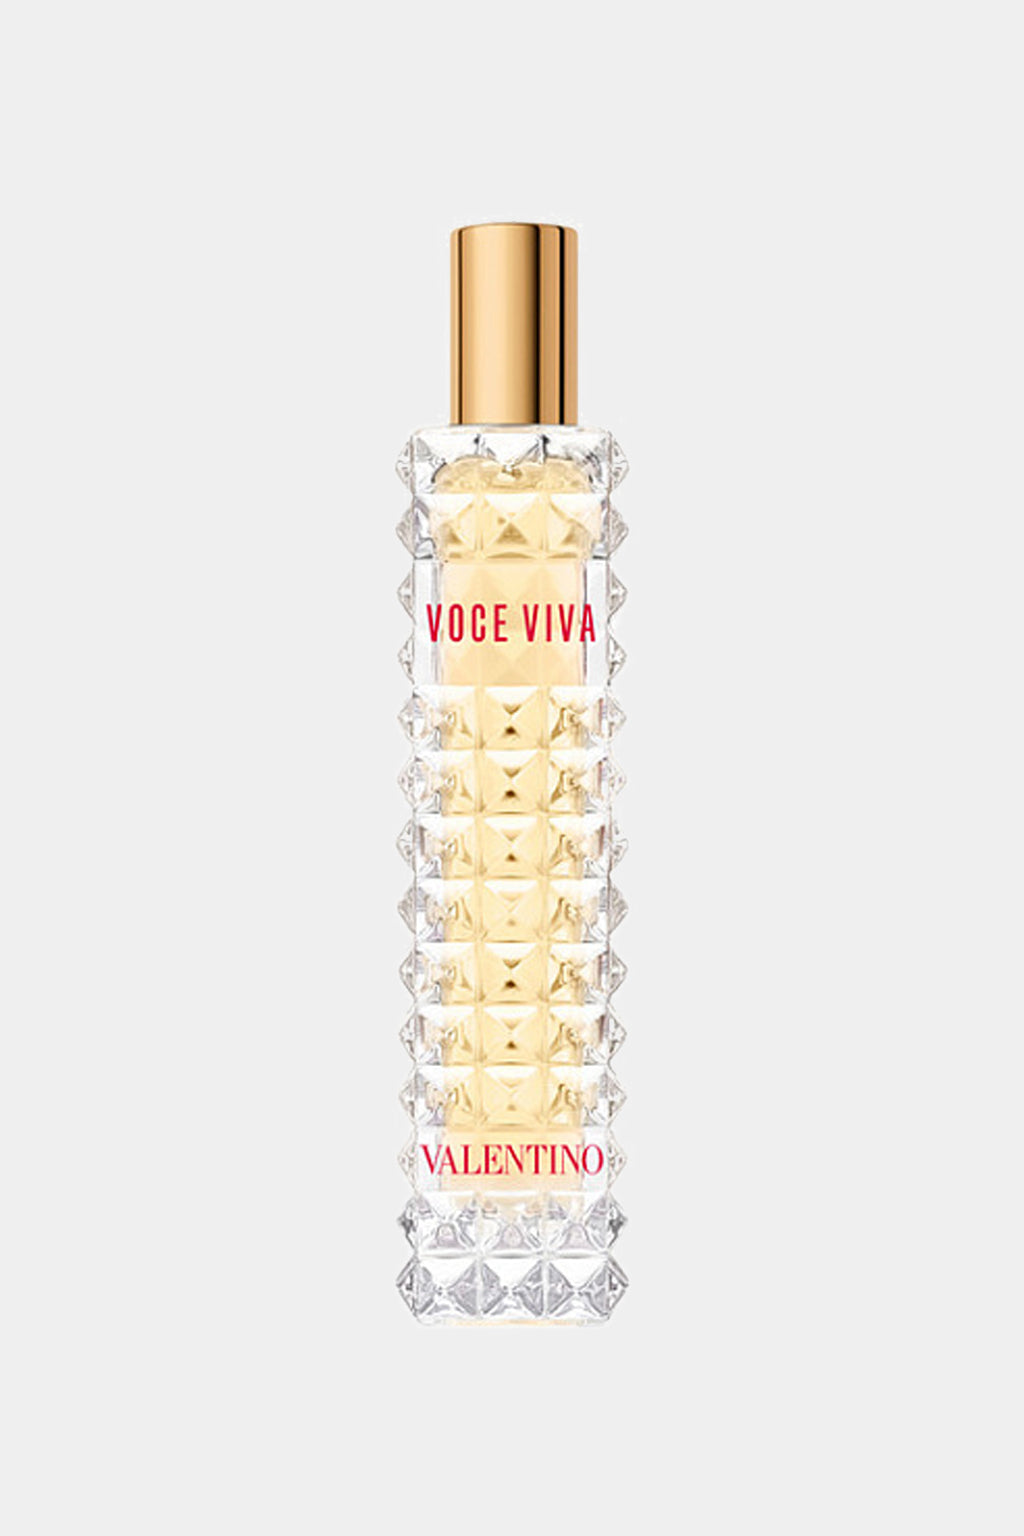 Valentino - Valentino Voce Viva Eau de Parfum Travel Spray